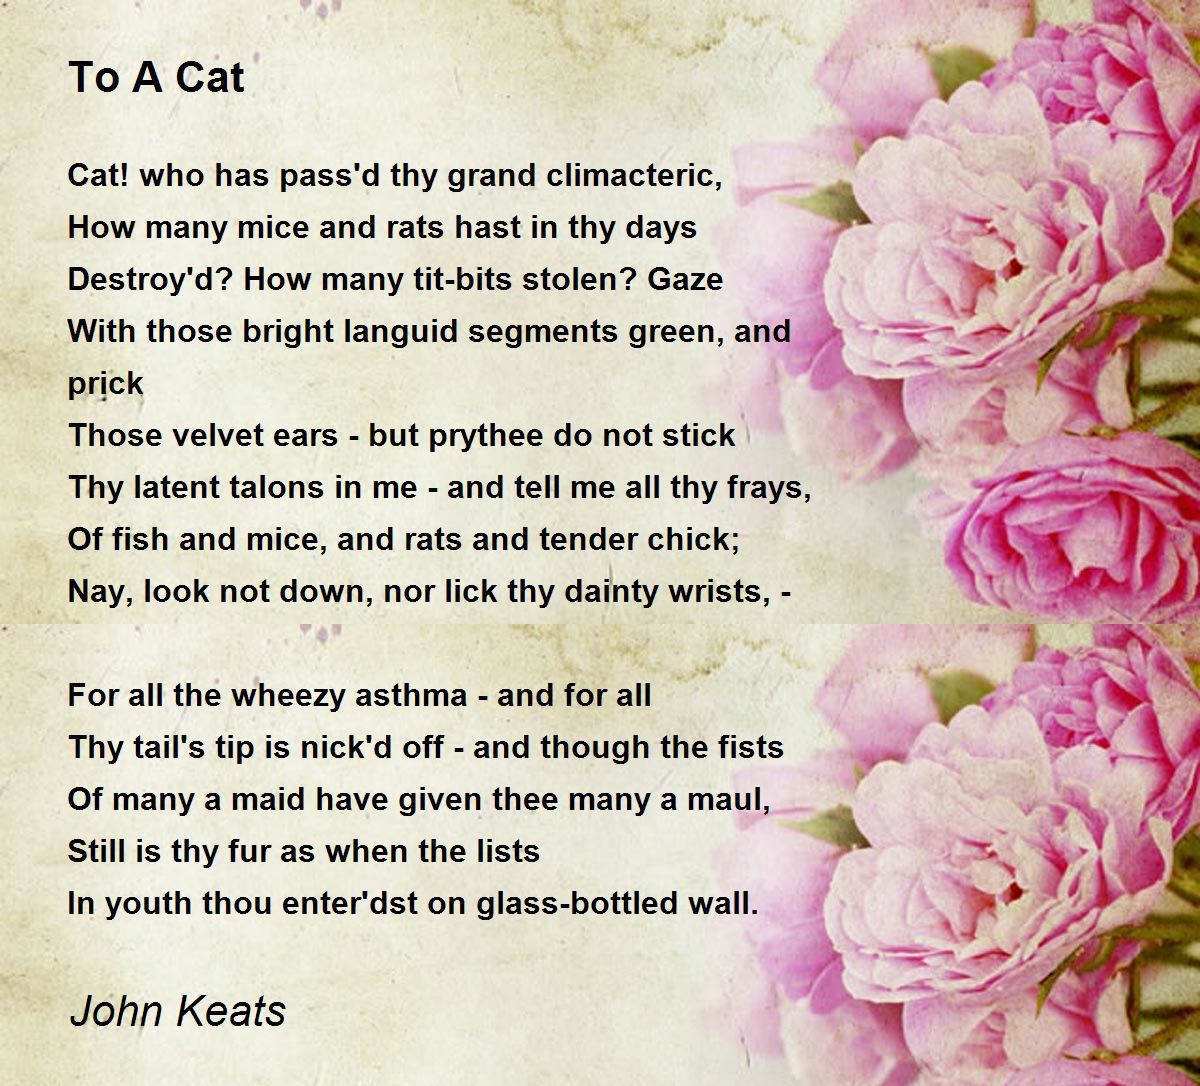 To A Cat Poem by John Keats - Poem Hunter